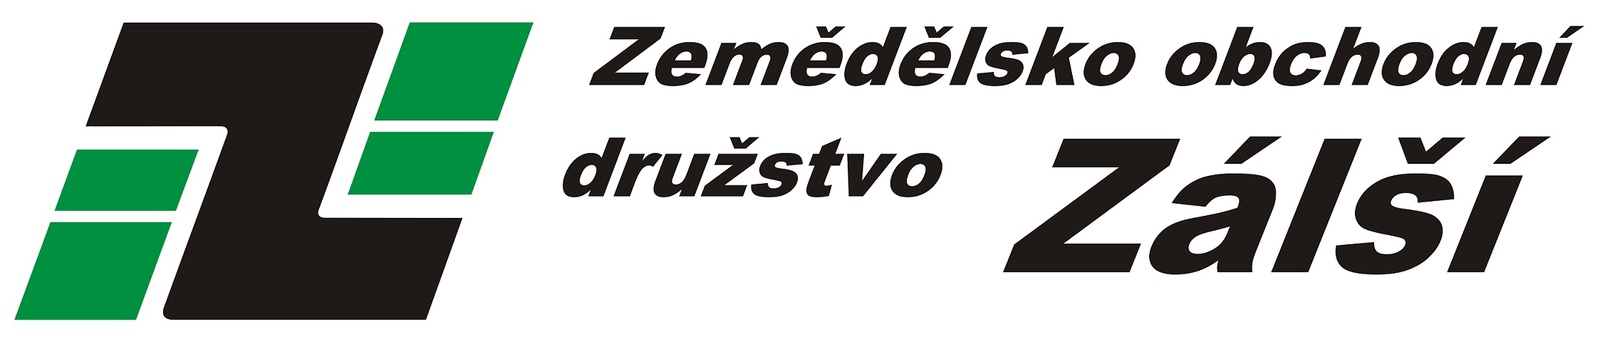 zod_zalsi logo.jpg